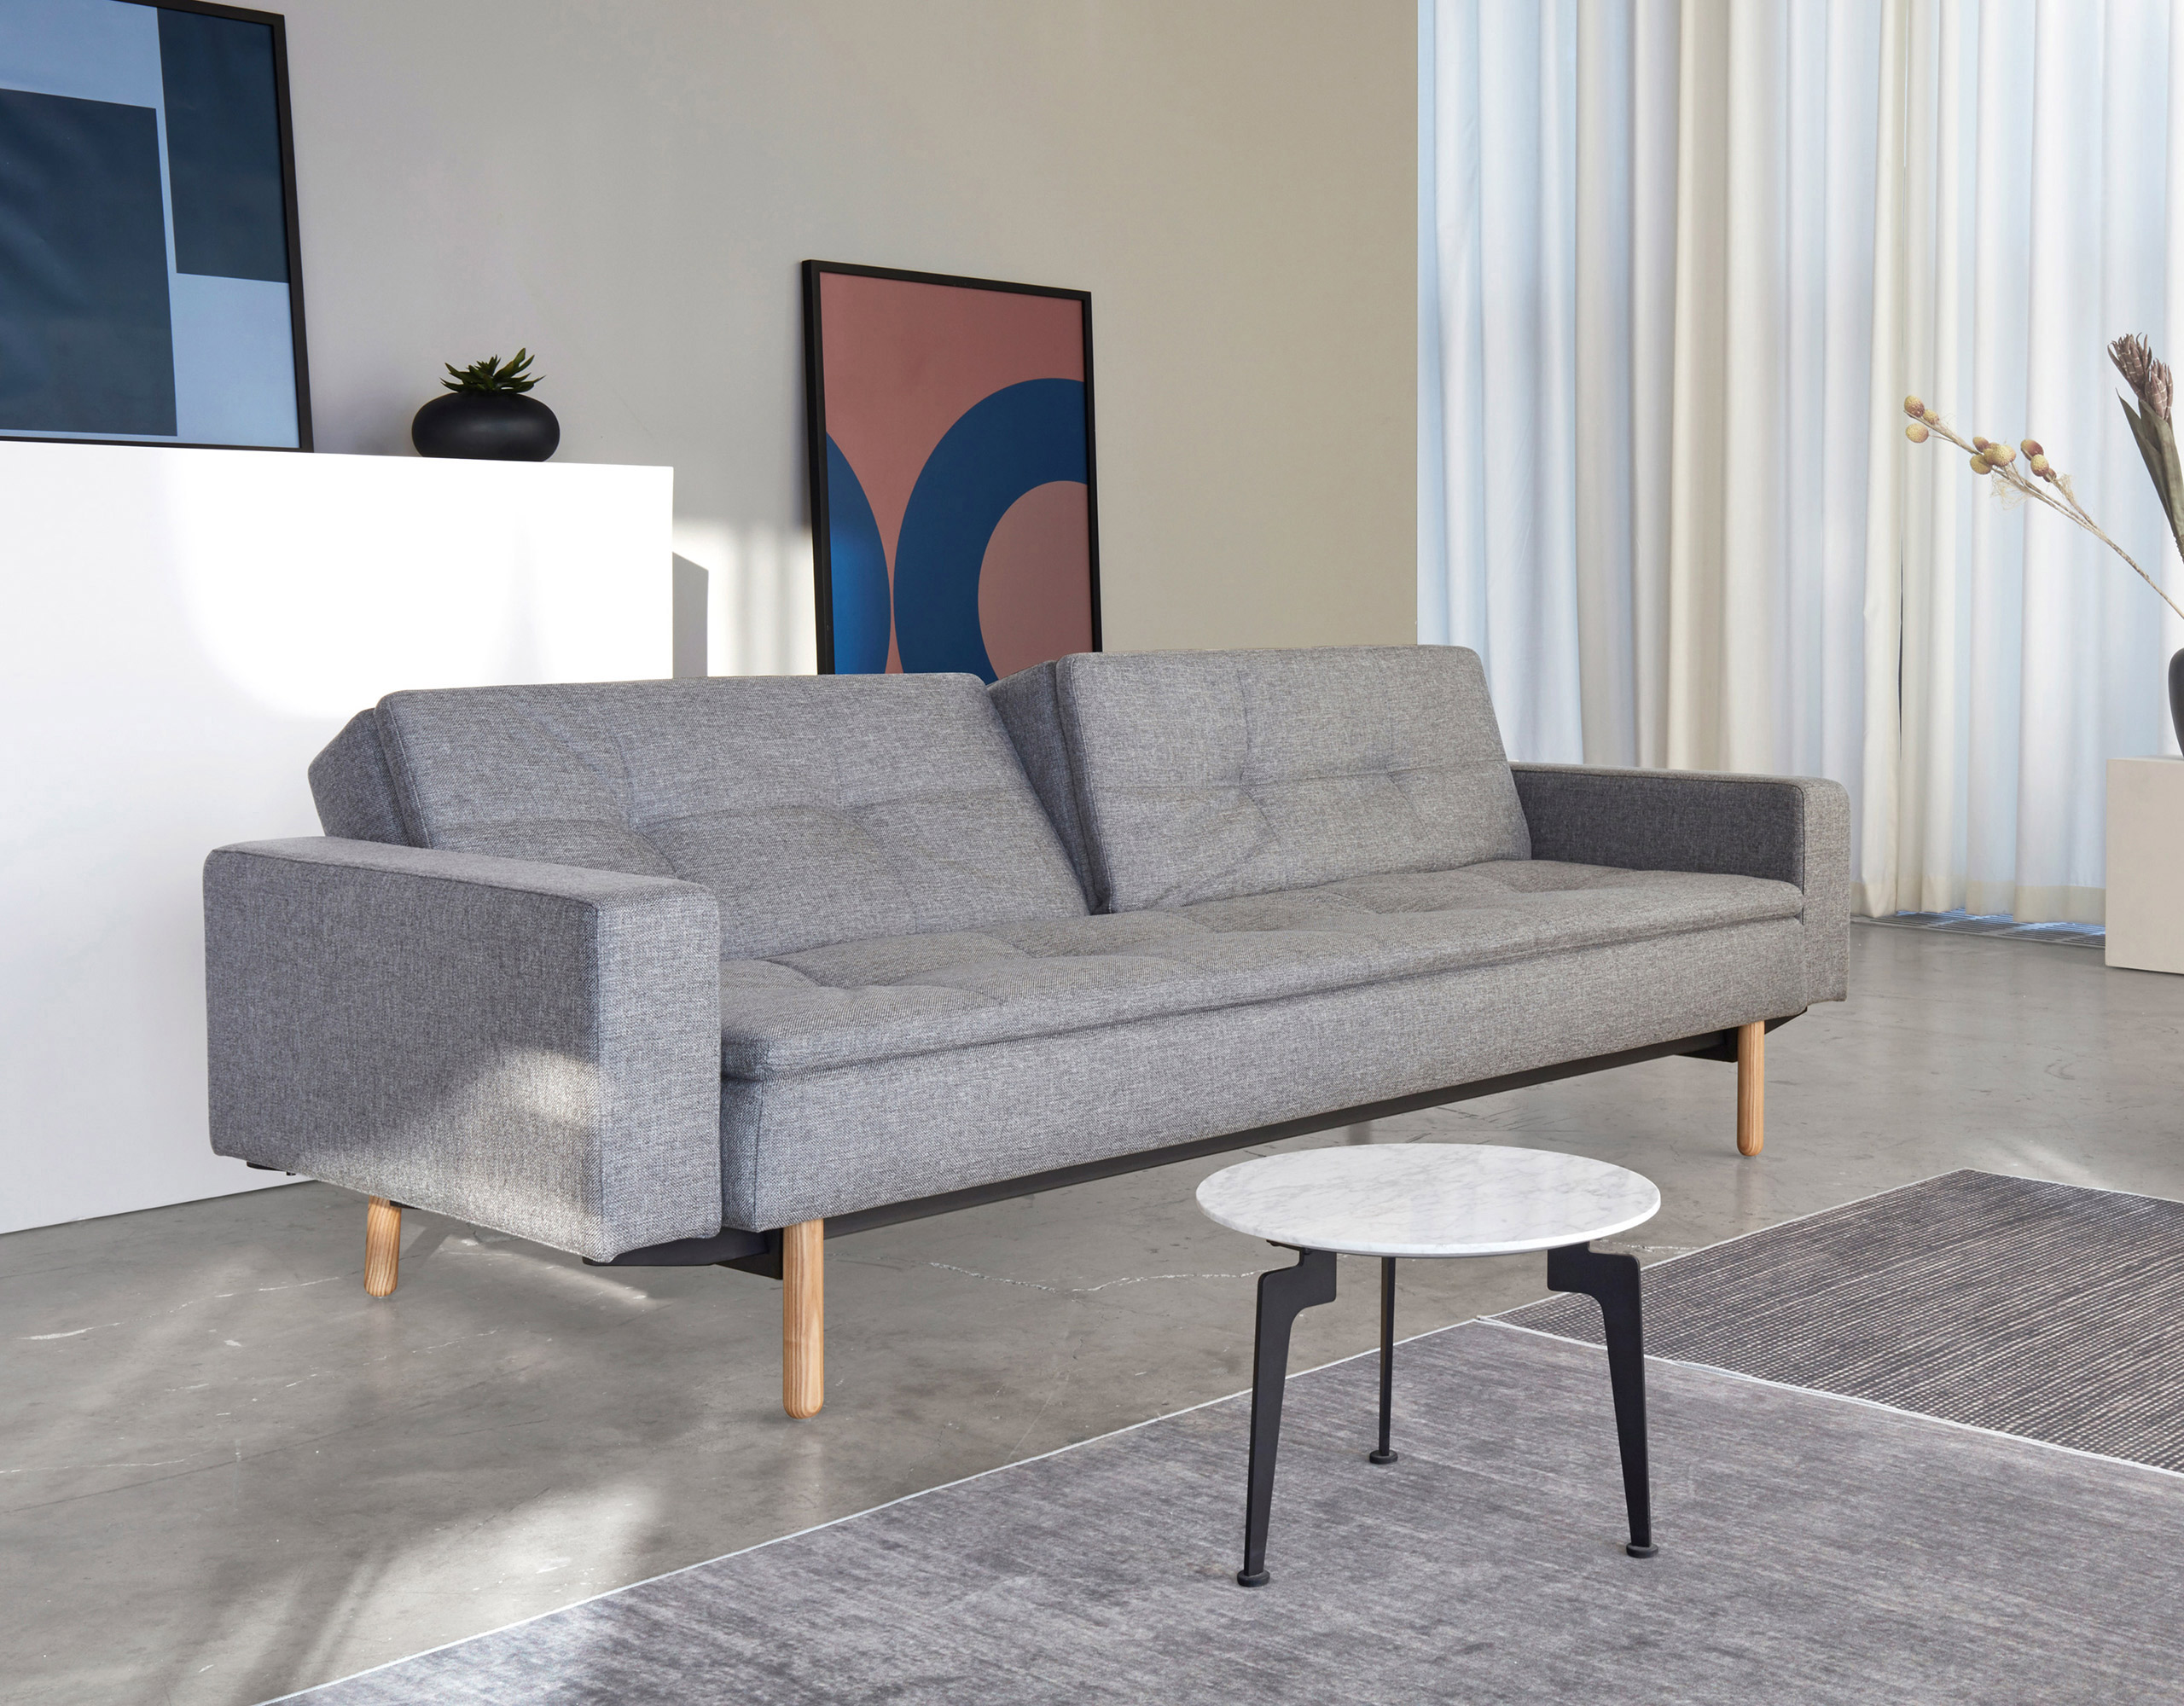 innovation dublexo sofa bed review